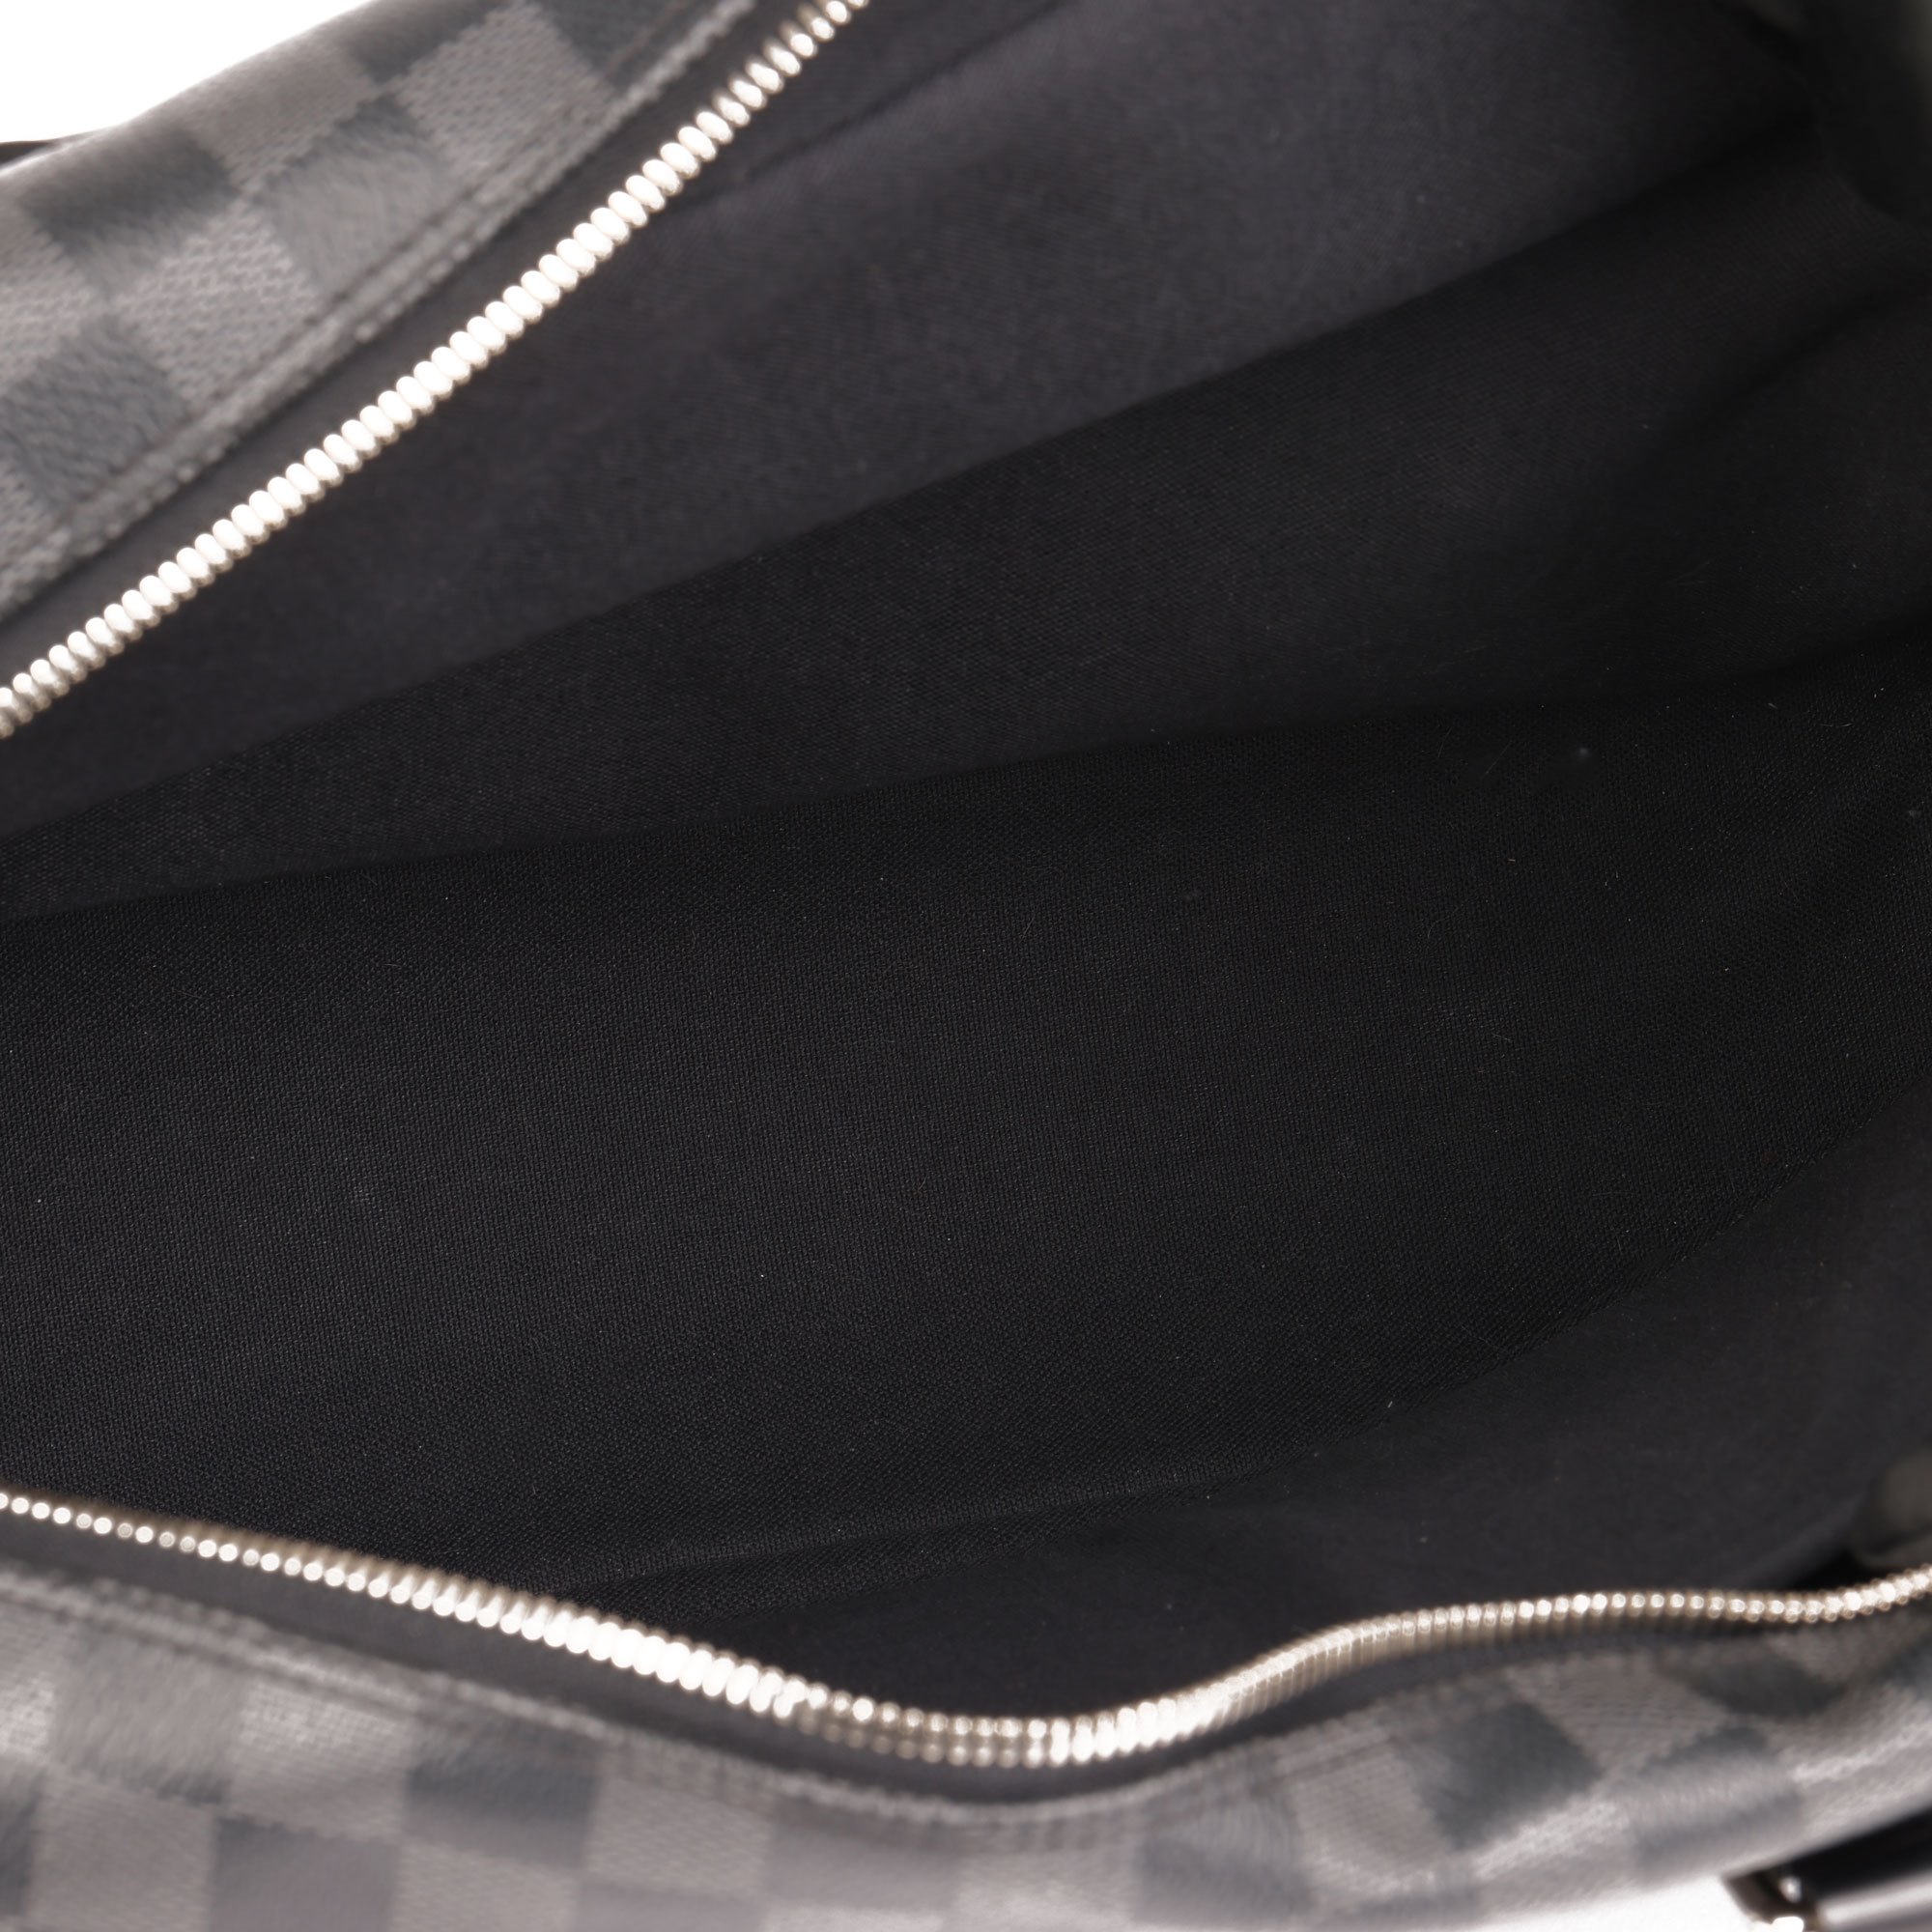 Louis Vuitton Damier Graphite Coated Canvas & Black Calfskin Leather Icare Briefcase